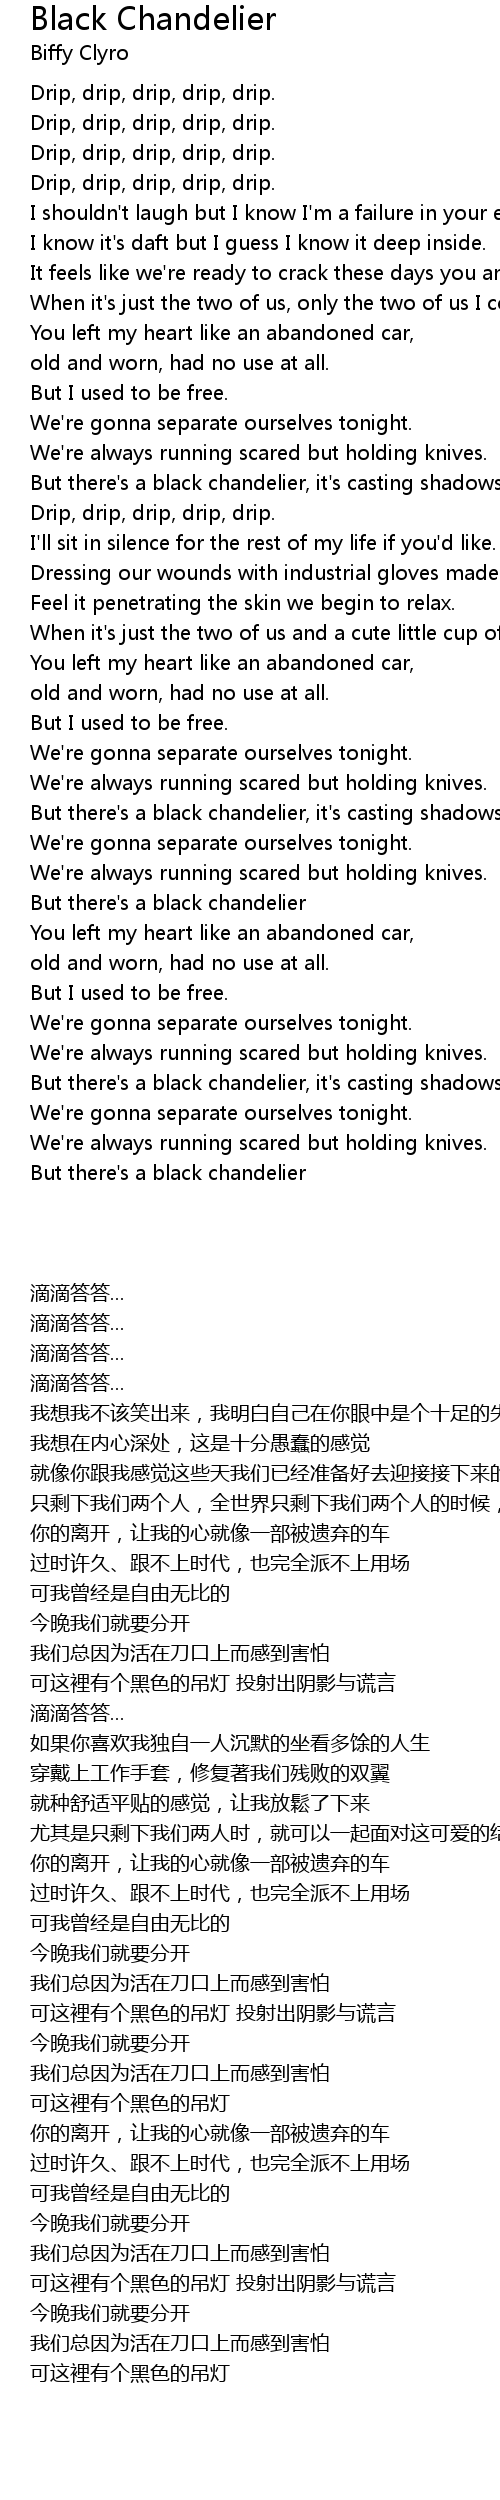 Black Chandelier Lyrics Follow Lyrics